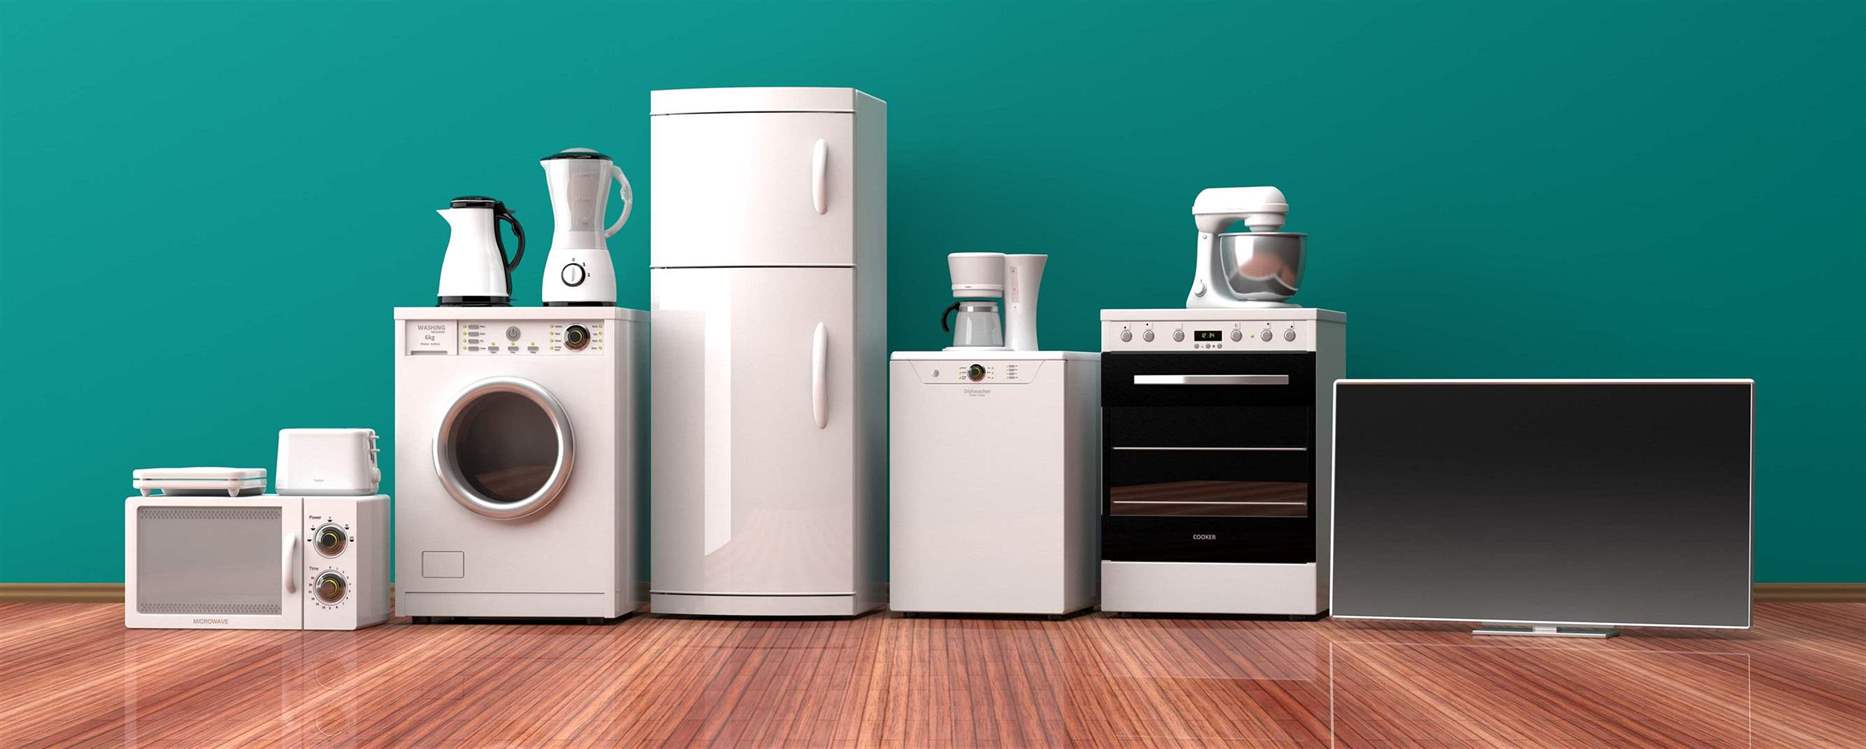 20 Home Appliances Power Consumption Background K Bestari | Free Hot ...